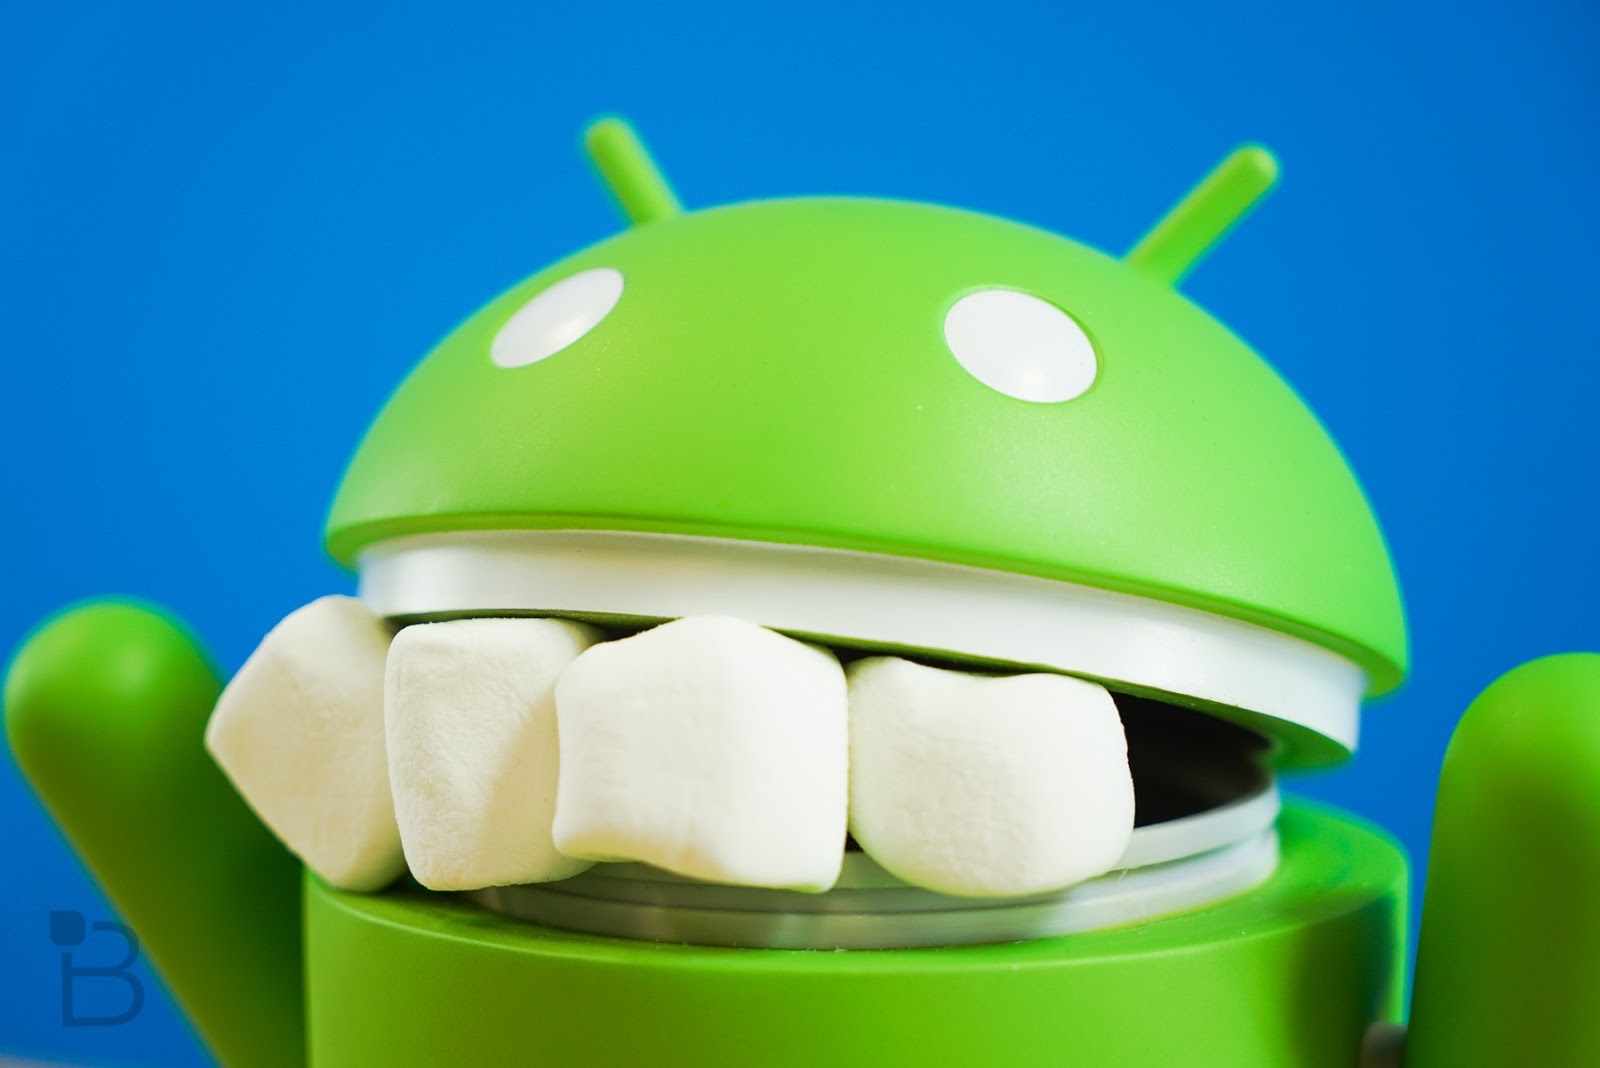 Kumpulan Foto Android 6.0 Marshmallow Terbaru | INFORMASI ...